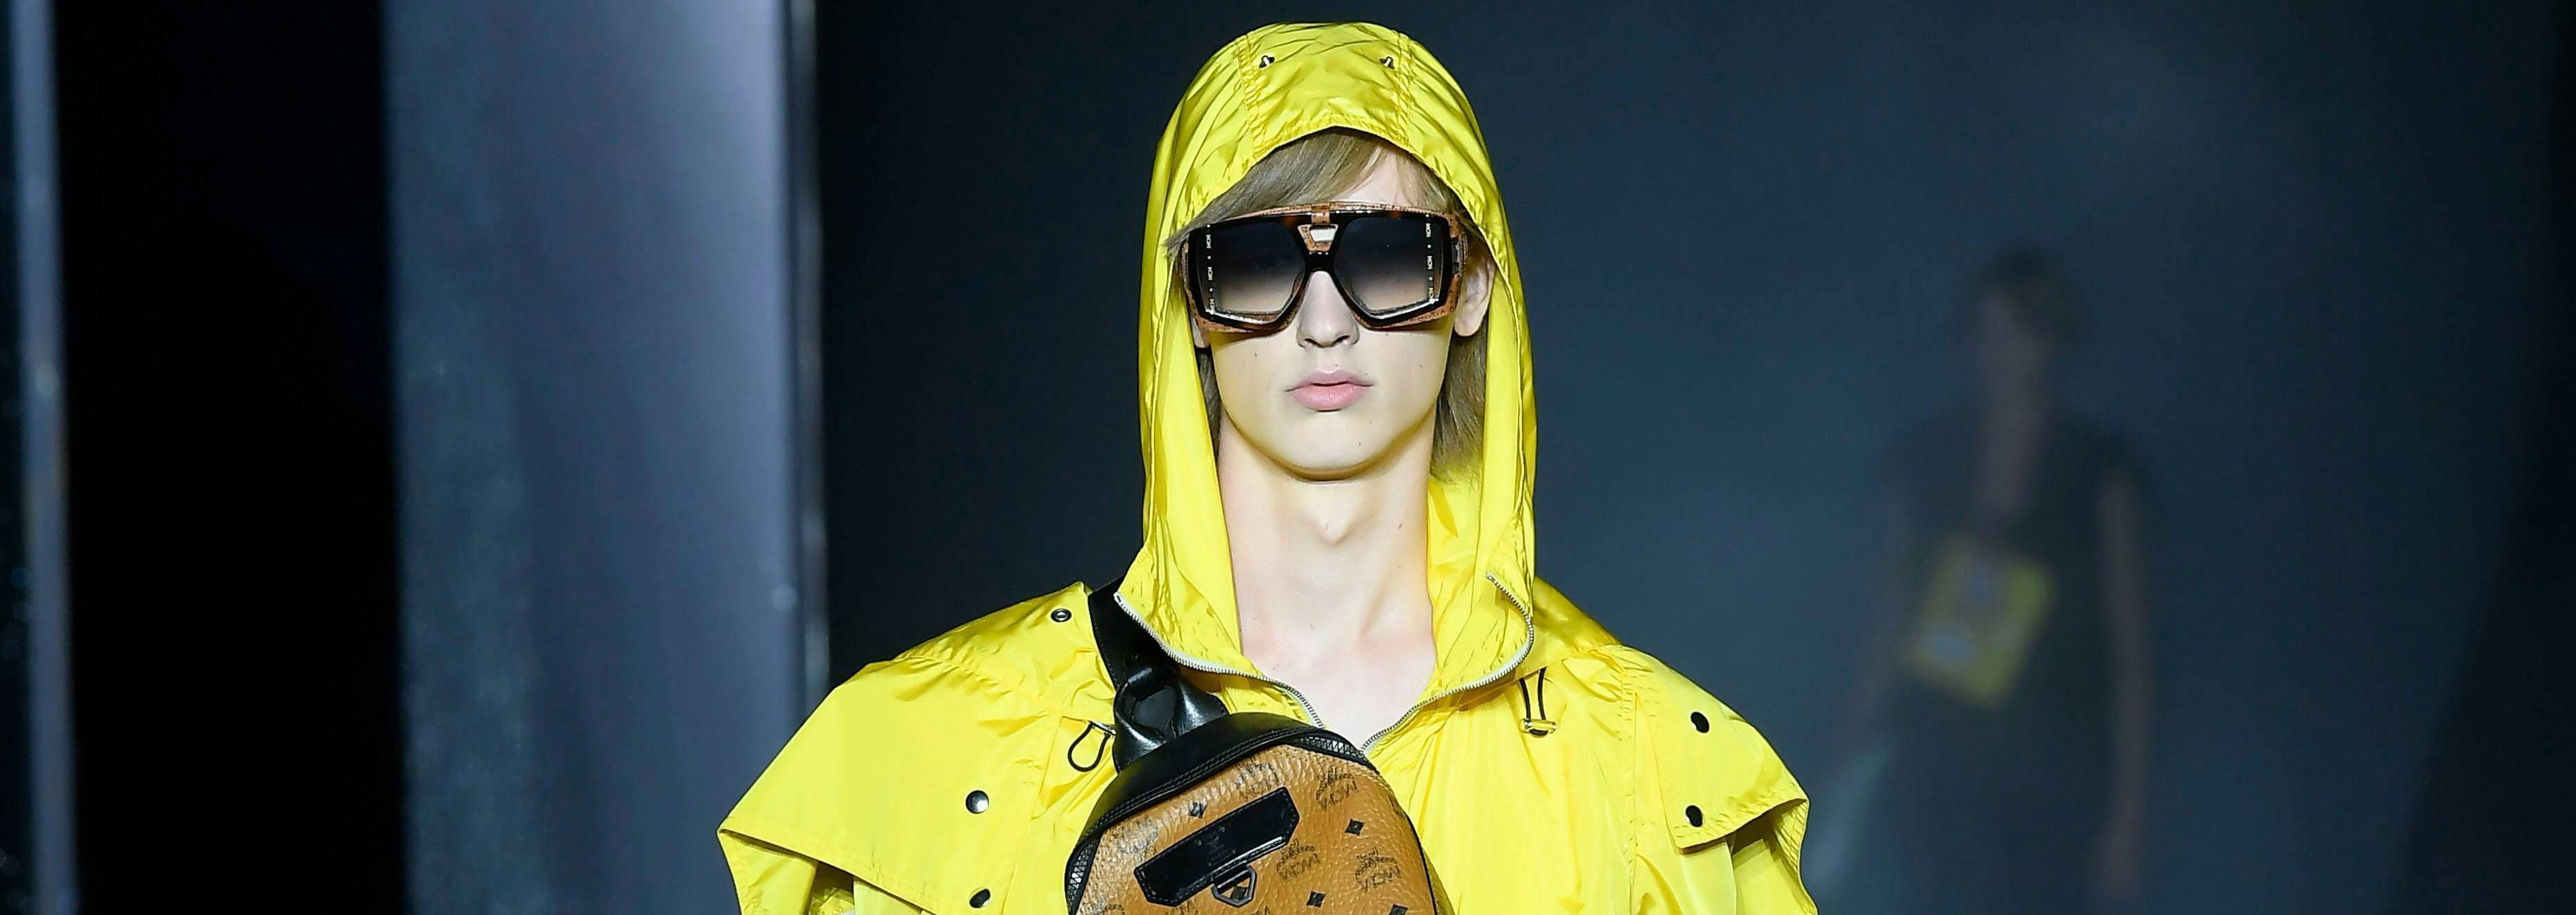 clothing apparel coat raincoat person human sunglasses accessories accessory